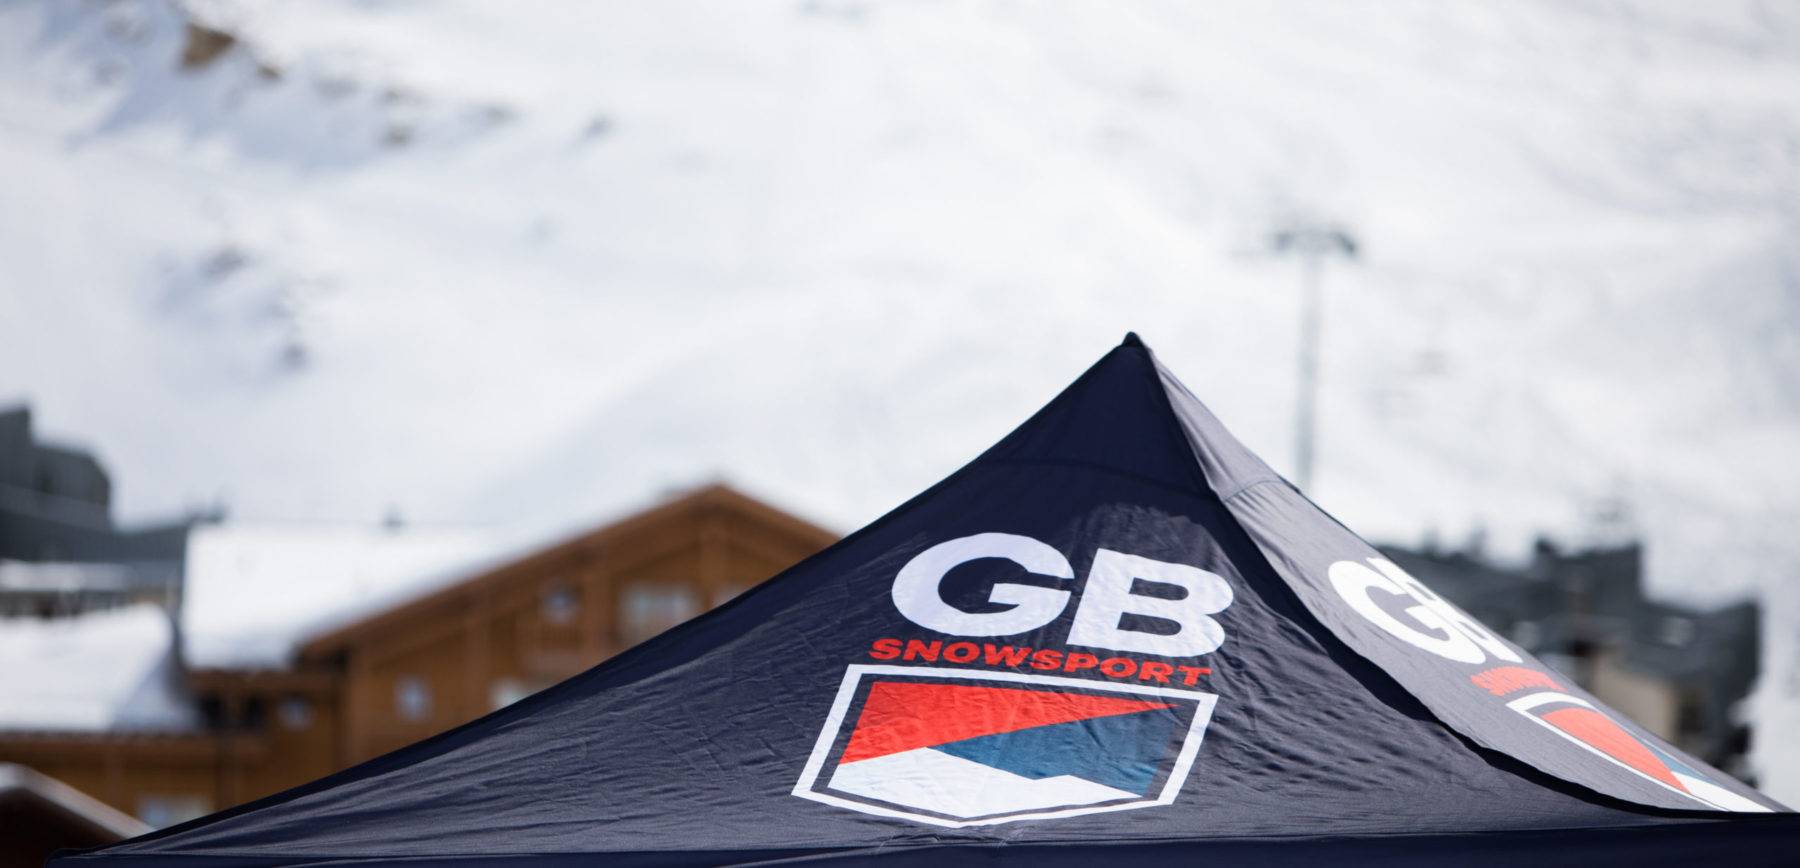 A statement from GB Snowsport